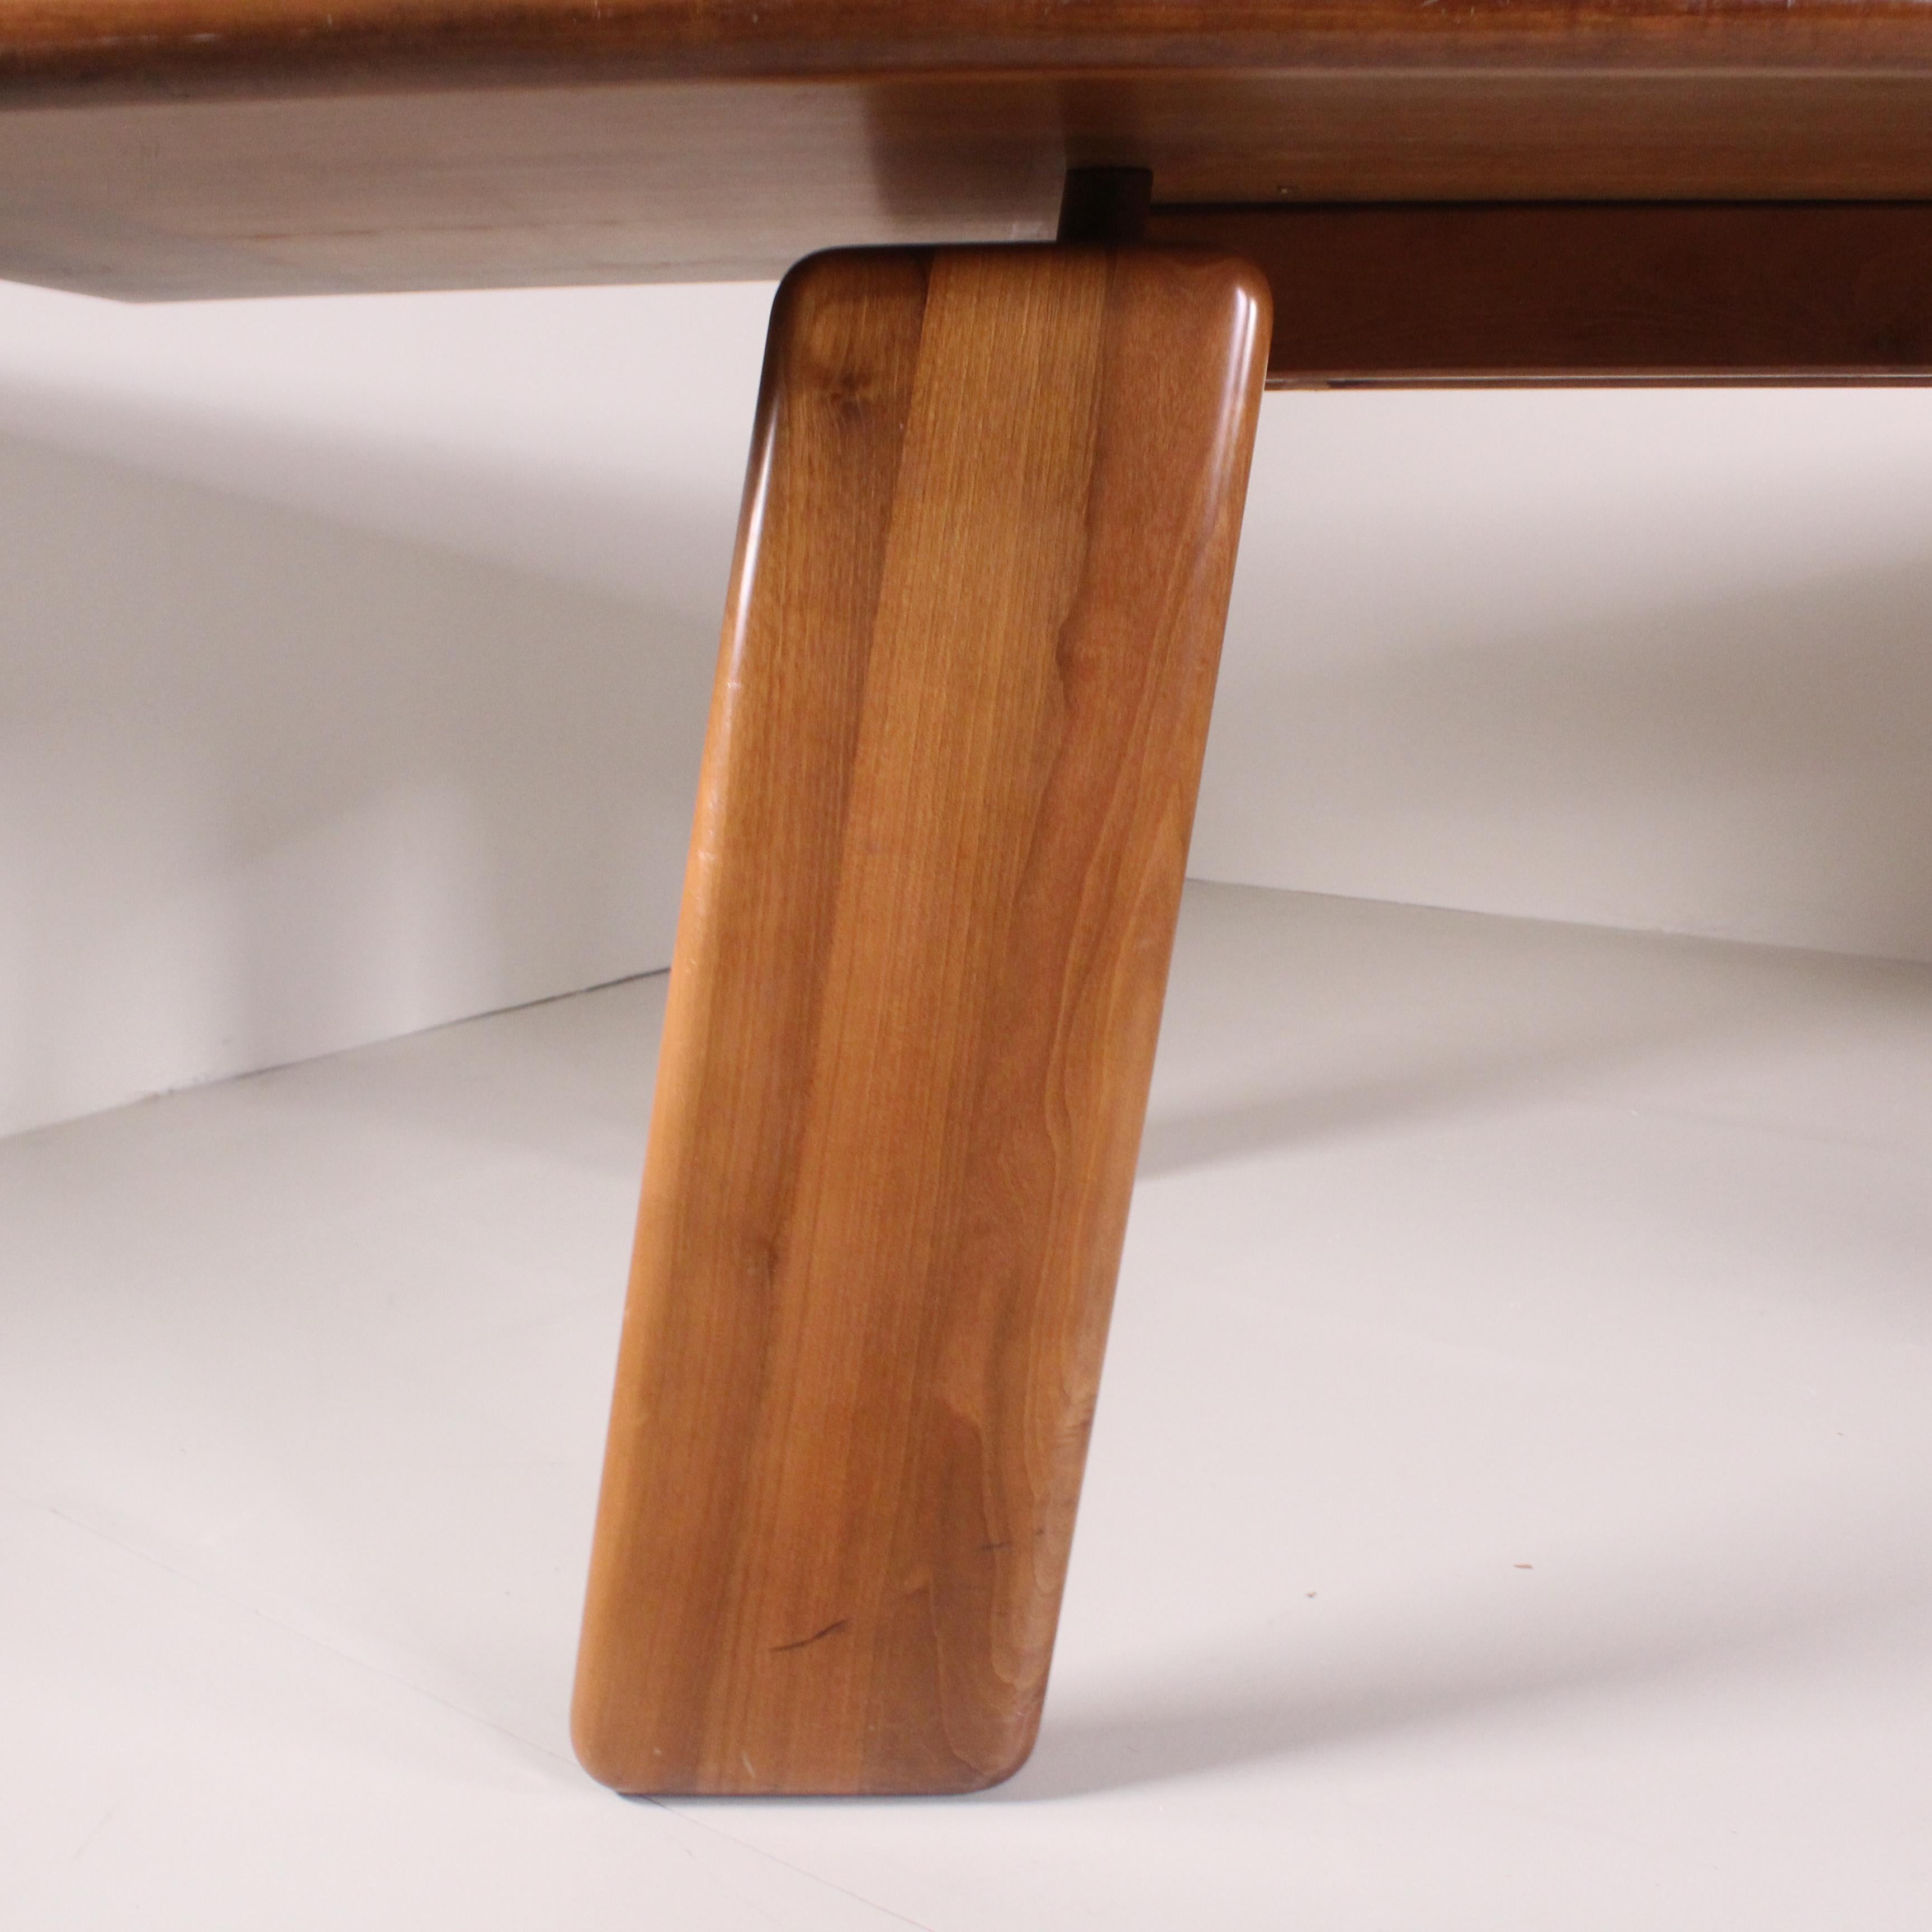  Wooden table, Mario Marenco, MobilGirgi, 1960 For Sale 1